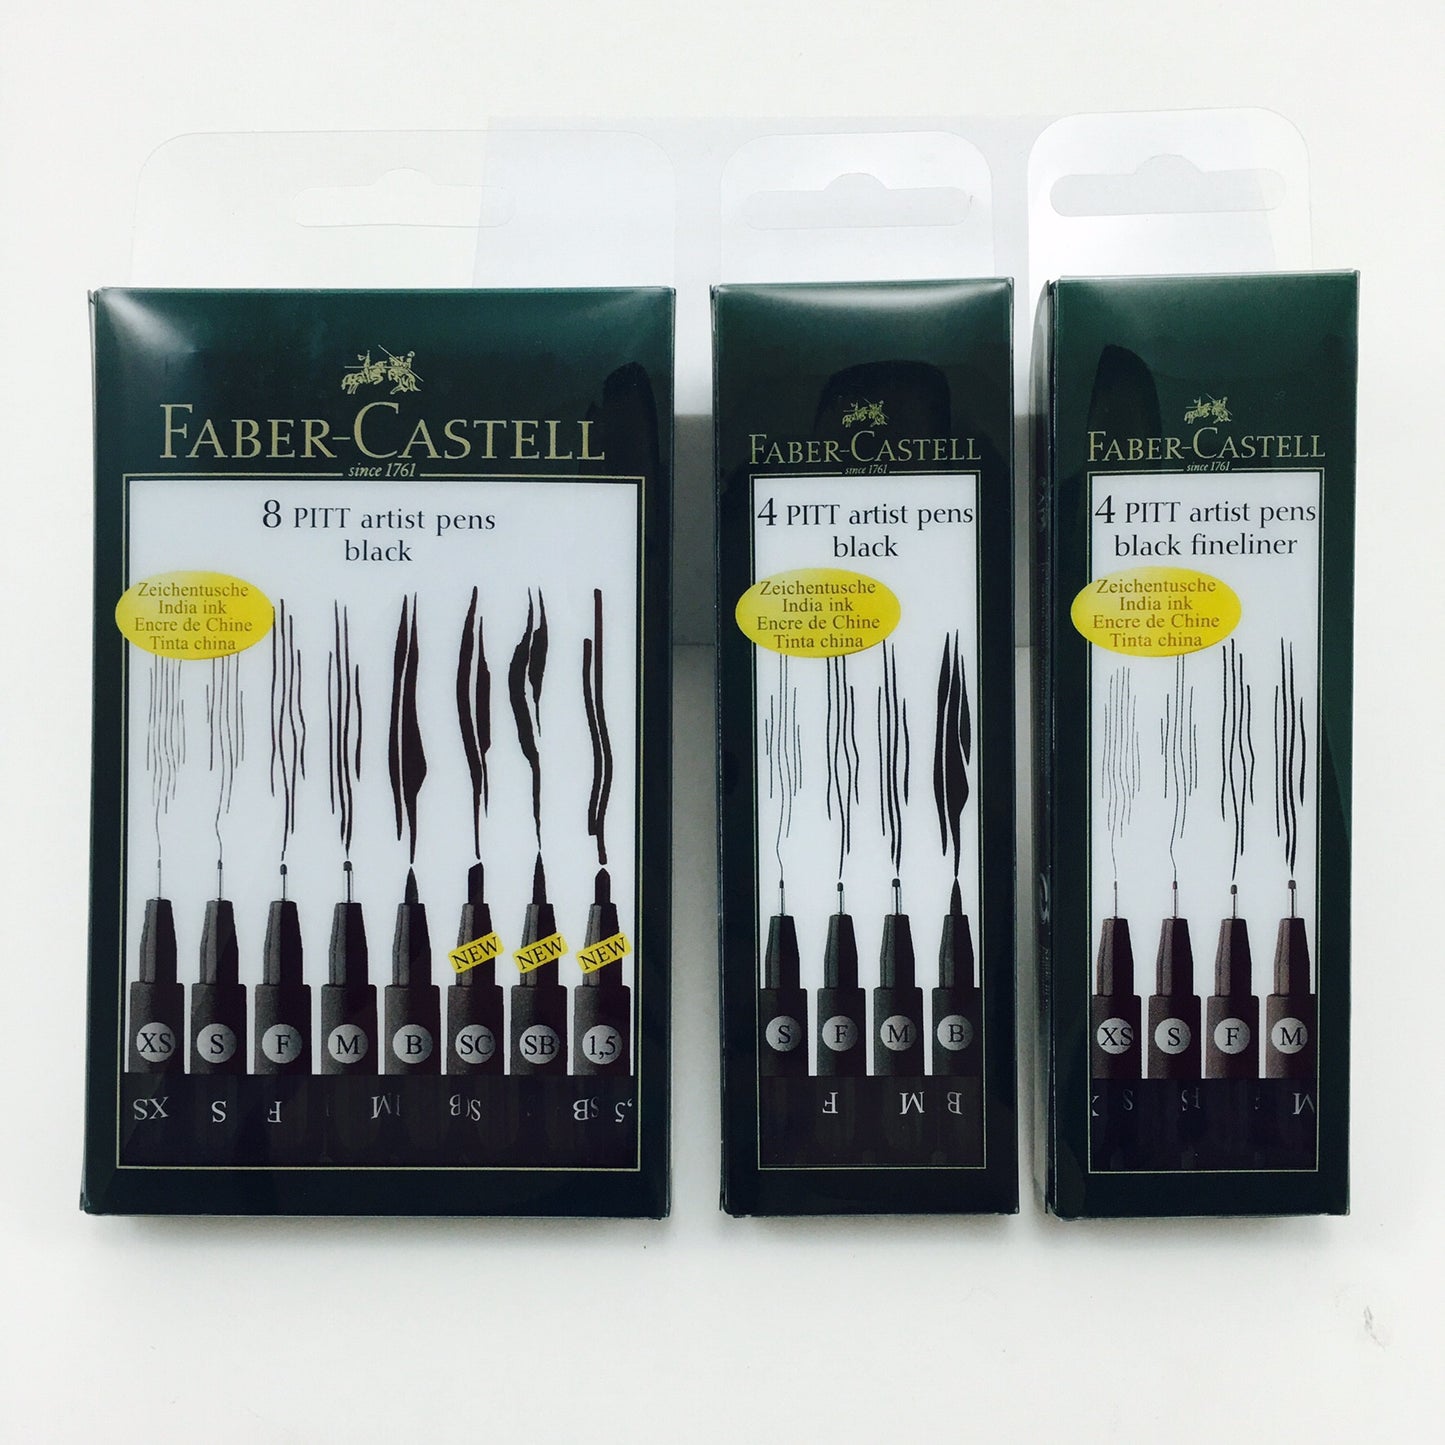 Faber-Castell PITT Big Brush Artist Pen - Black